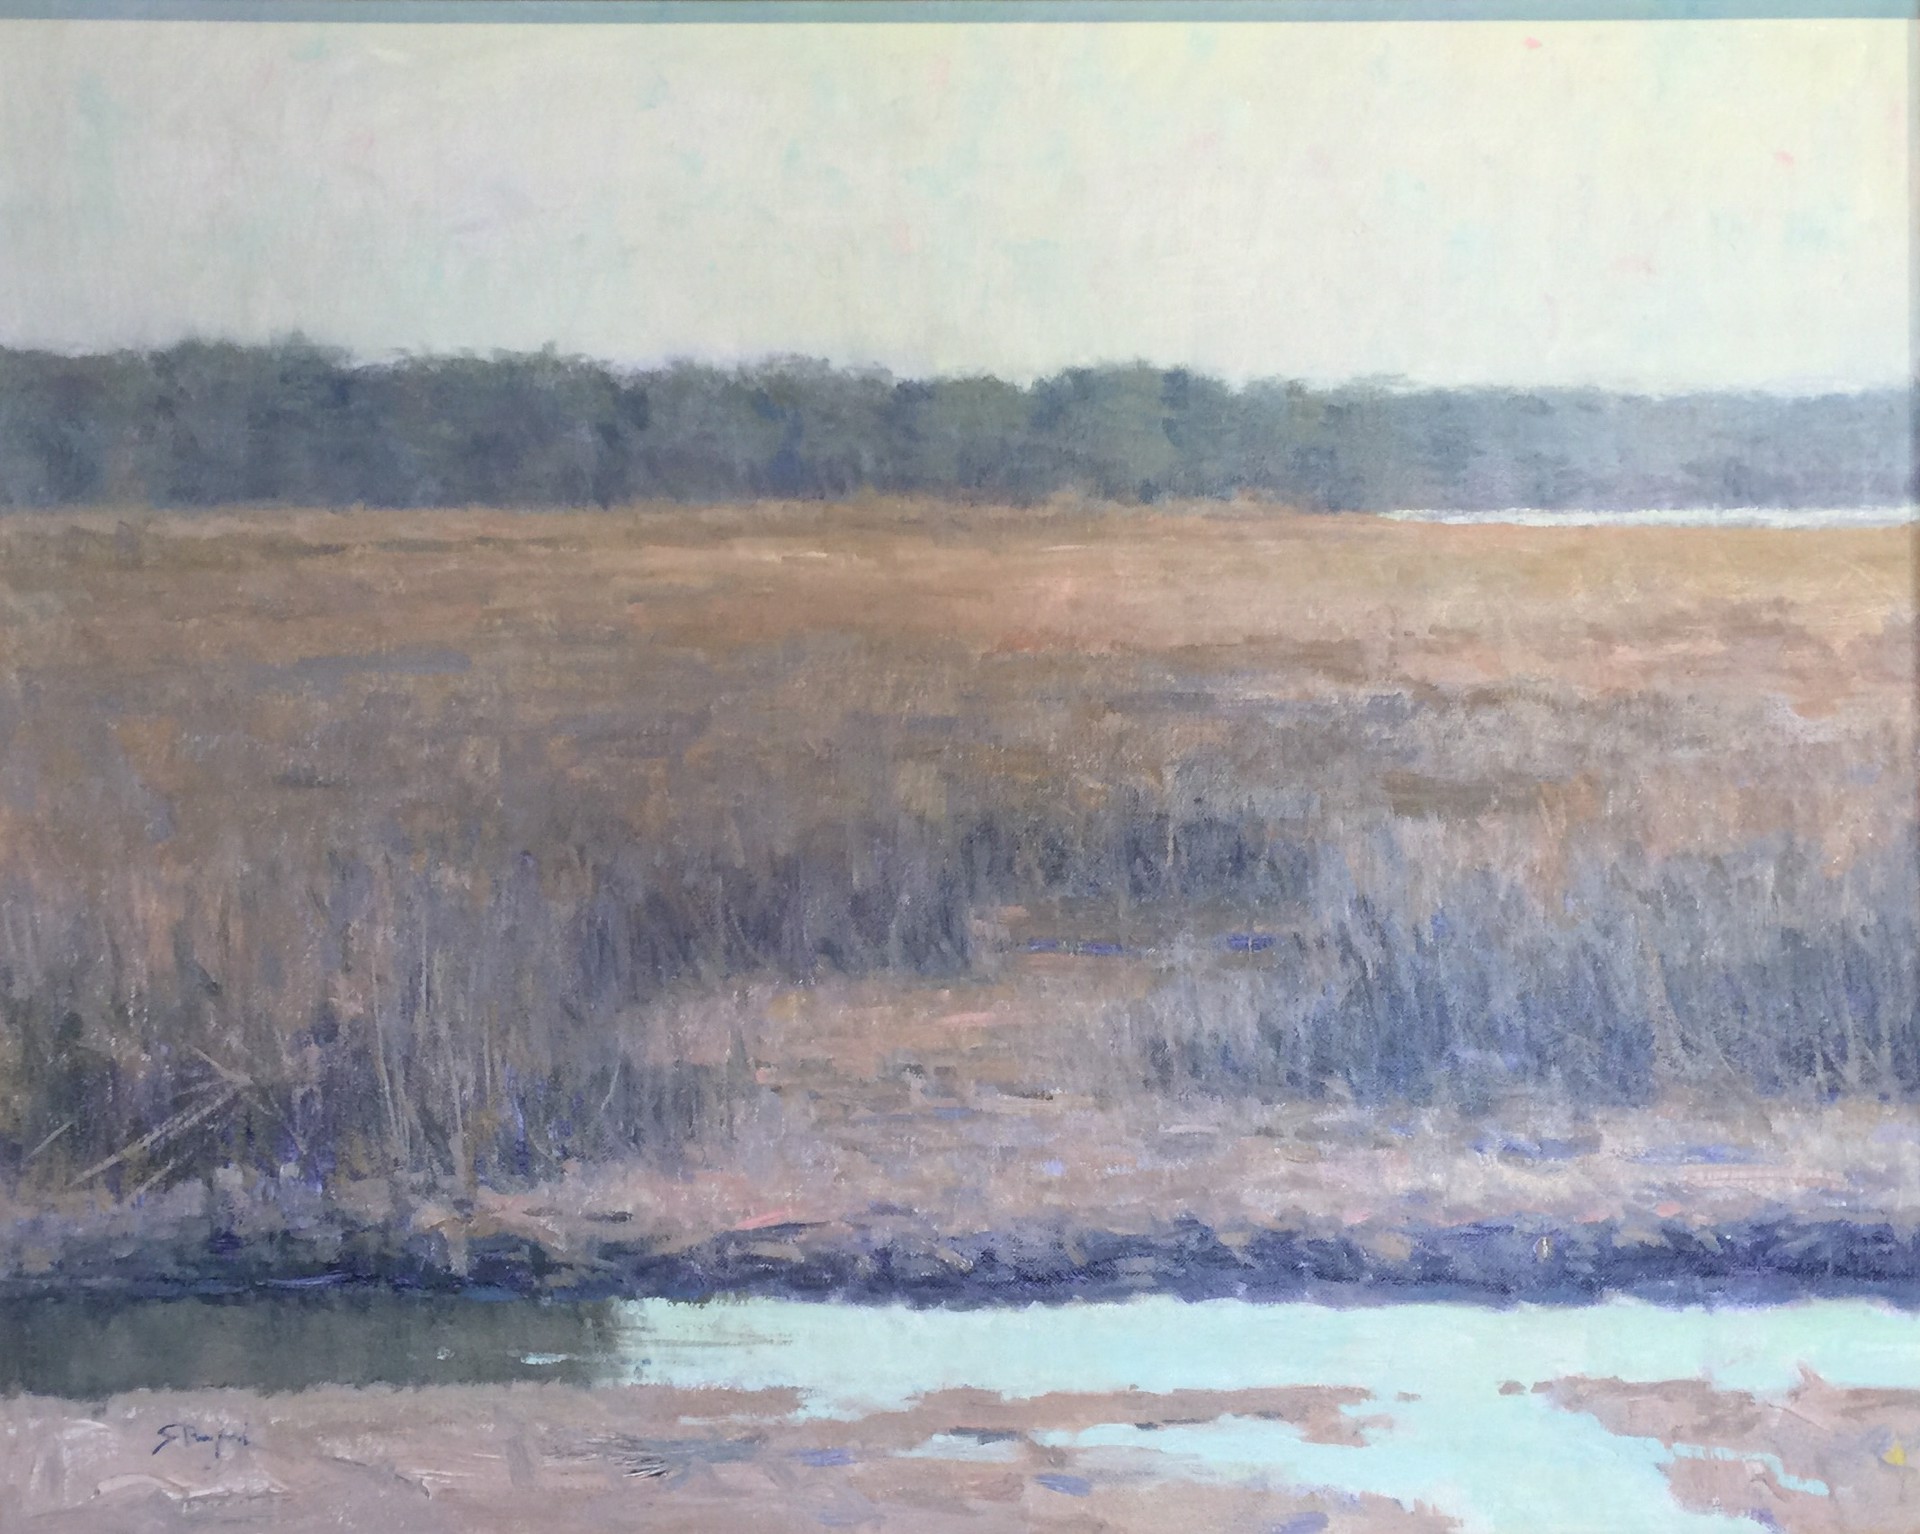 Sea Island Marsh by John Stanford